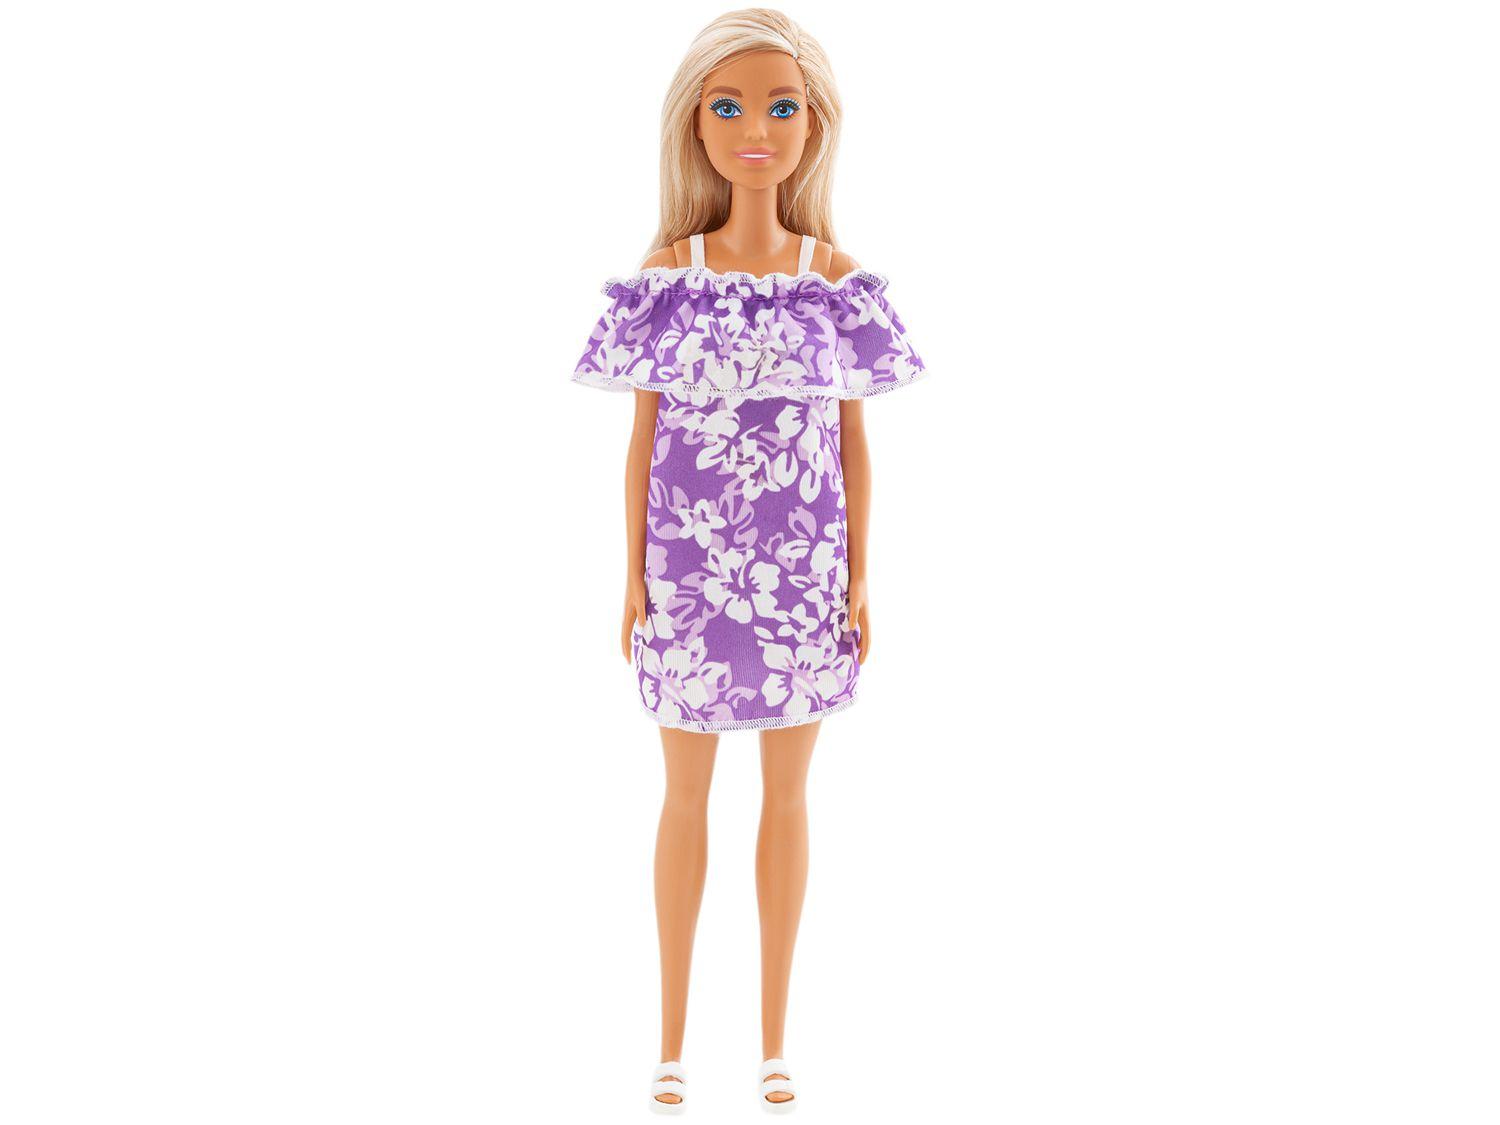 Aniversario Vestido Da Barbie